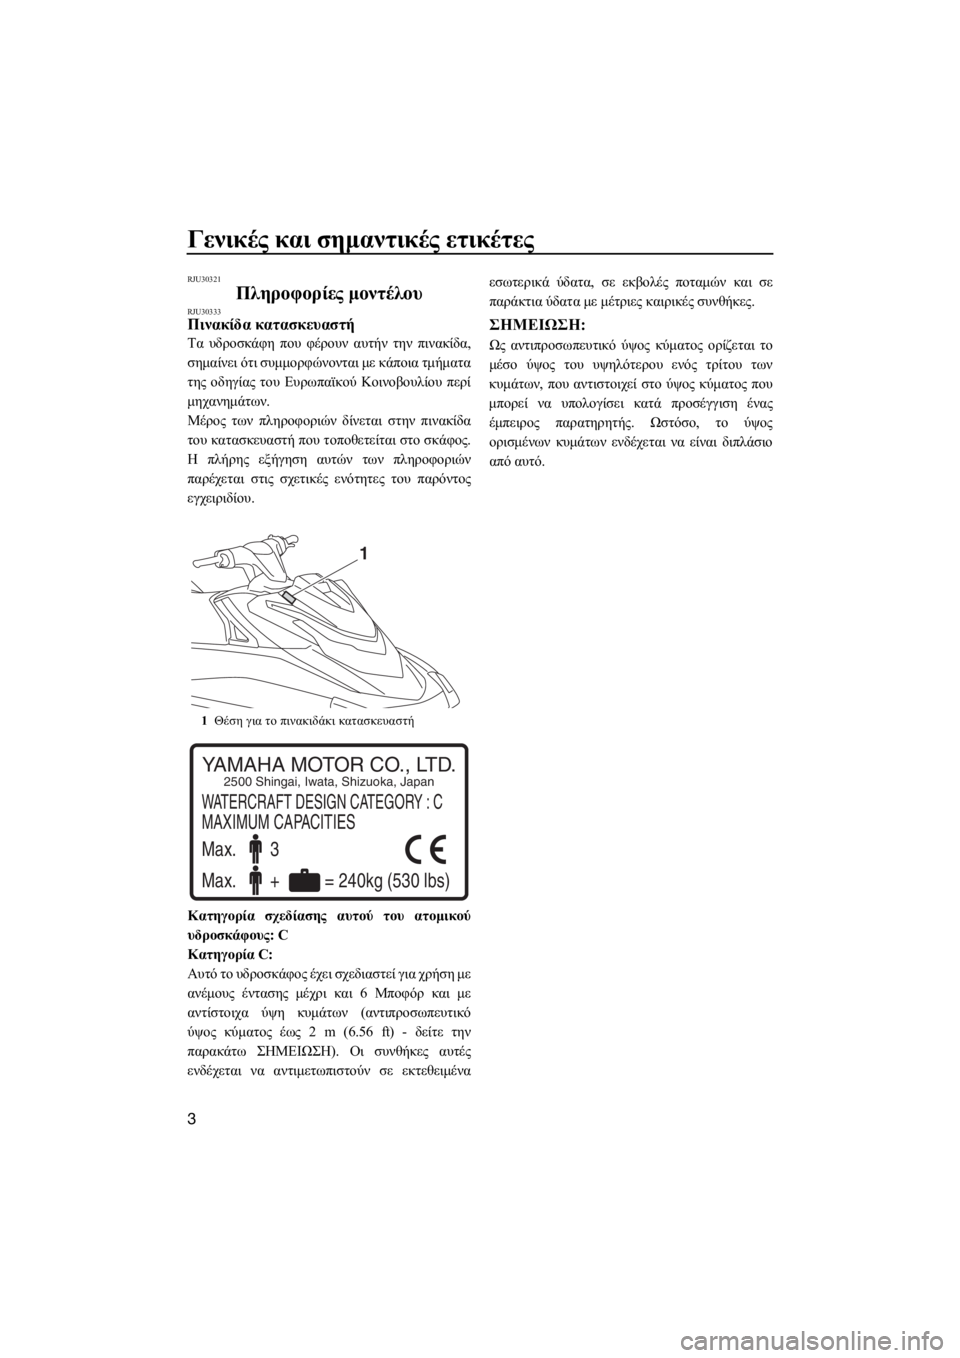 YAMAHA GP1800 2017  ΟΔΗΓΌΣ ΧΡΉΣΗΣ (in Greek) Γενικές και σημαντικές ετικέτες
3
RJU30321
Πληροφορίες μοντέλουRJU30333Πινακίδα κατασκευαστή
Τα υδροσκάφη που φέρο�